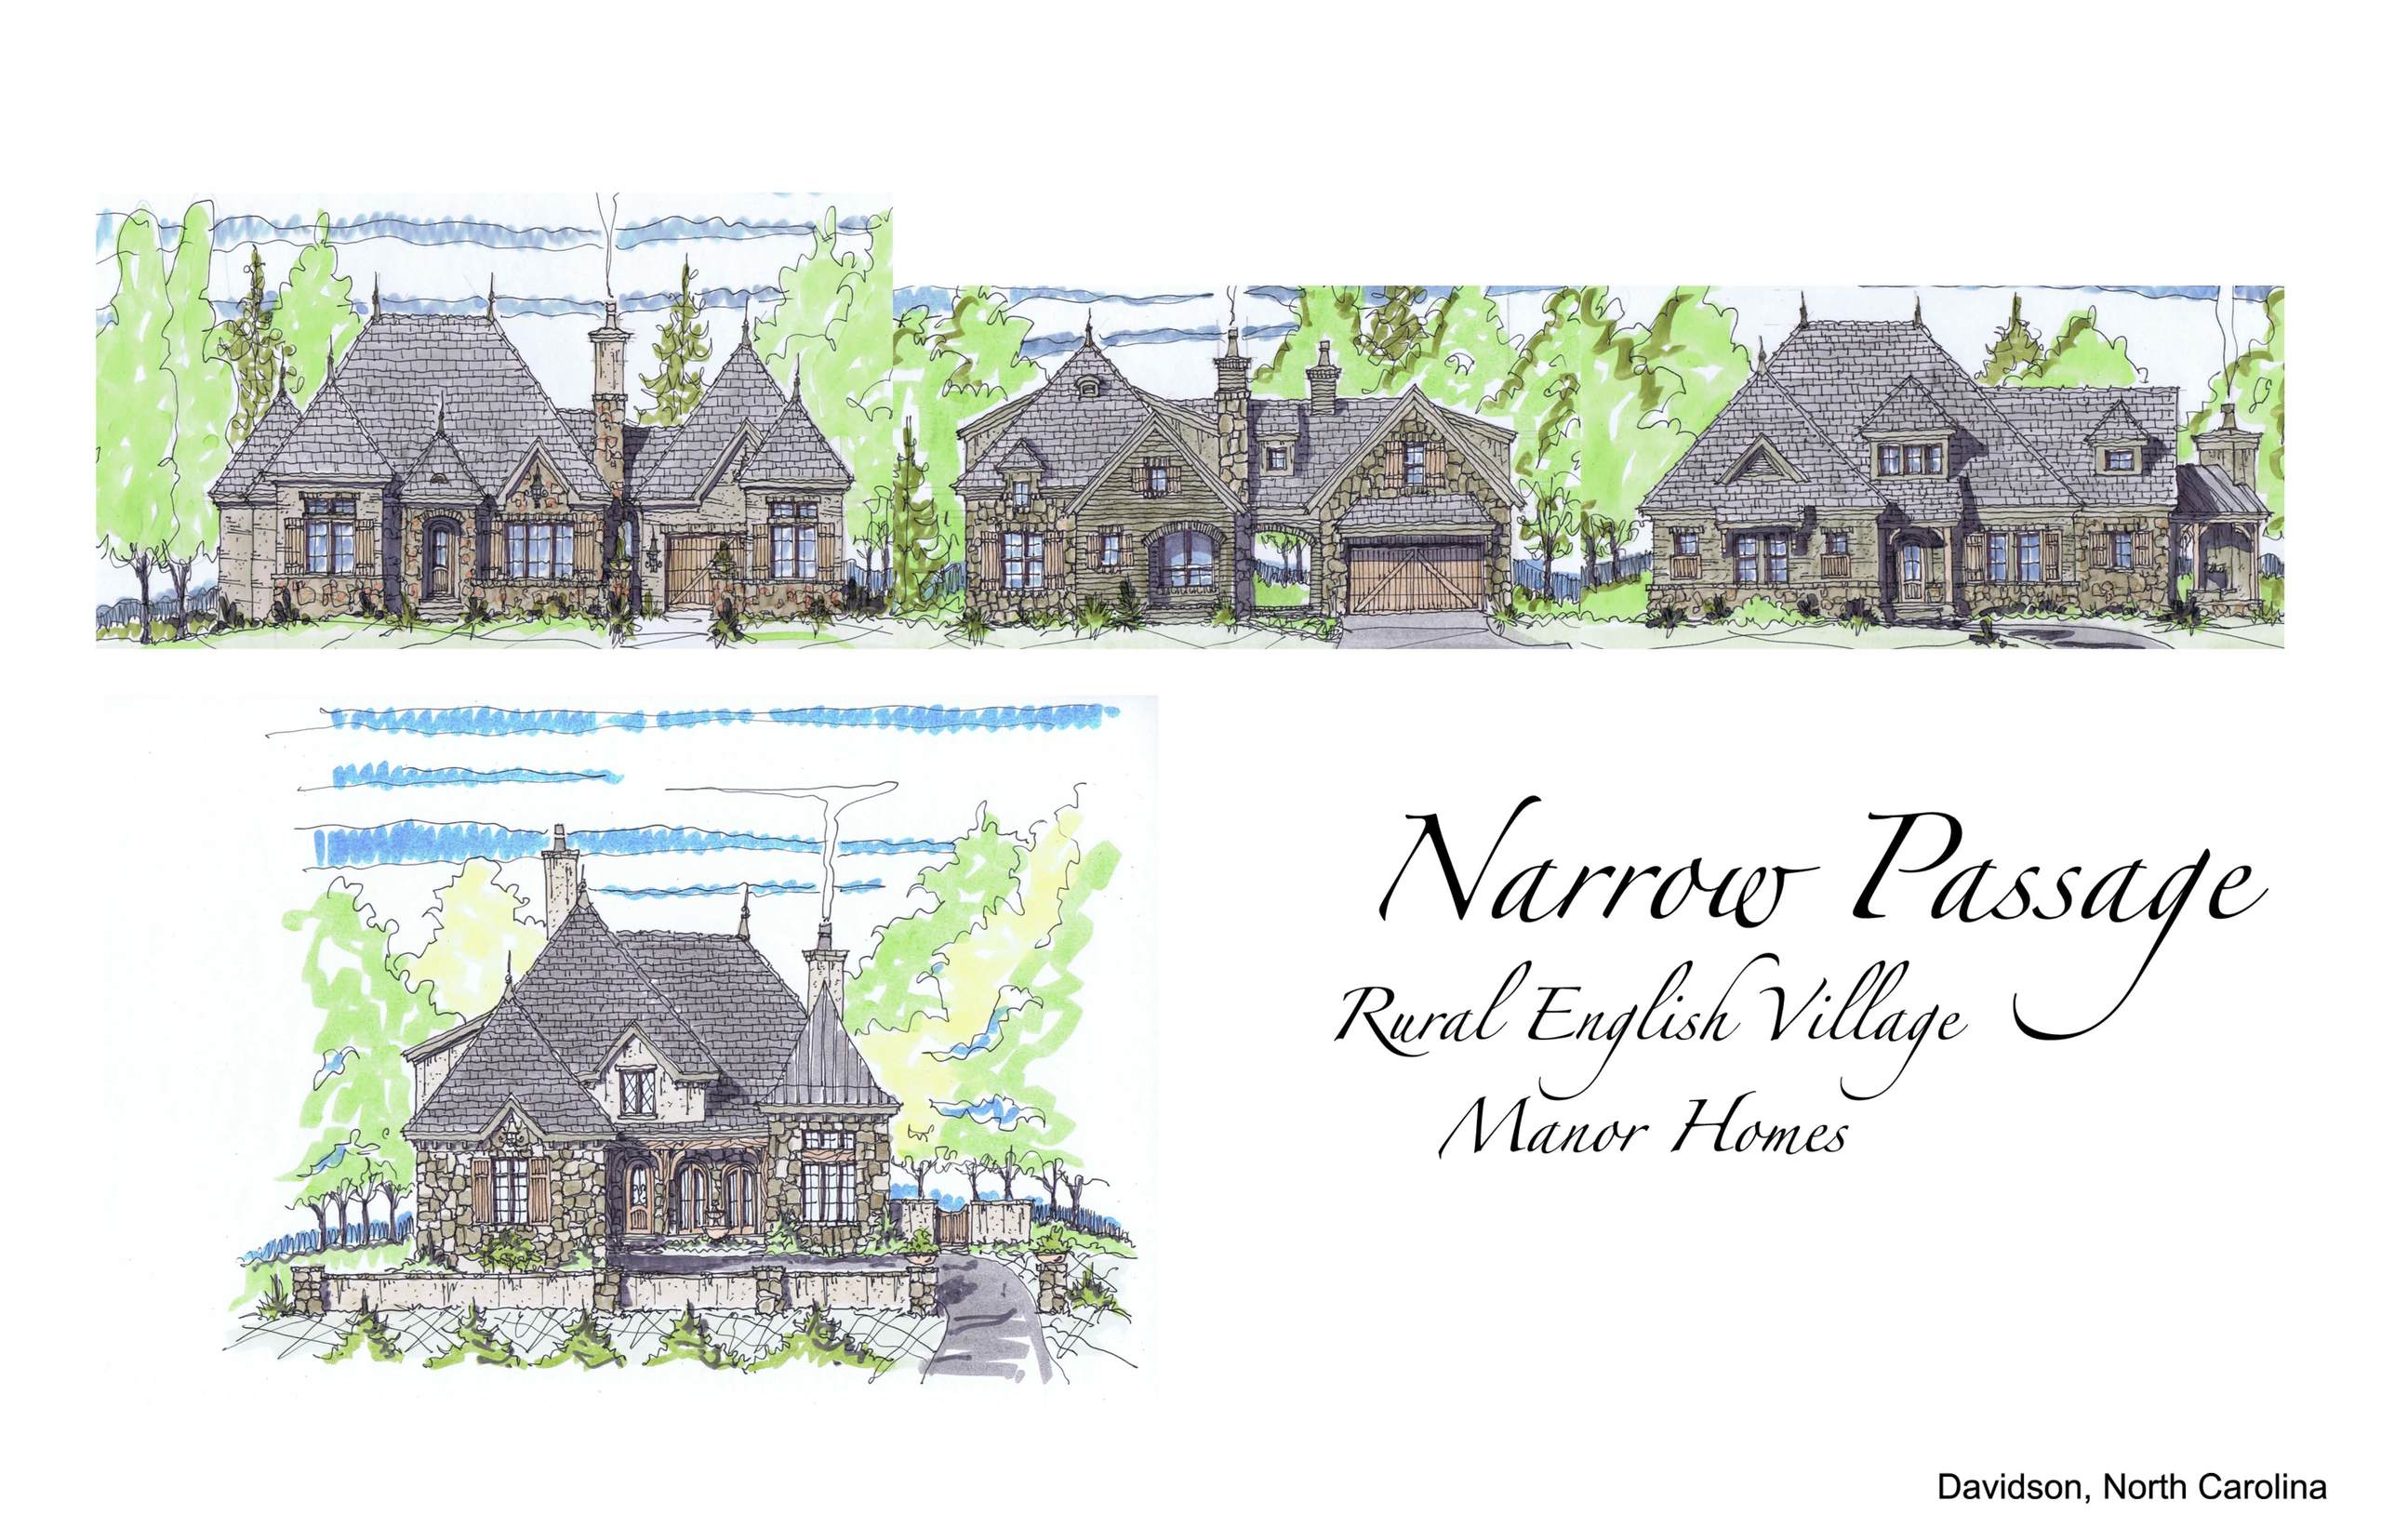 Narrow Passage Manor Homes